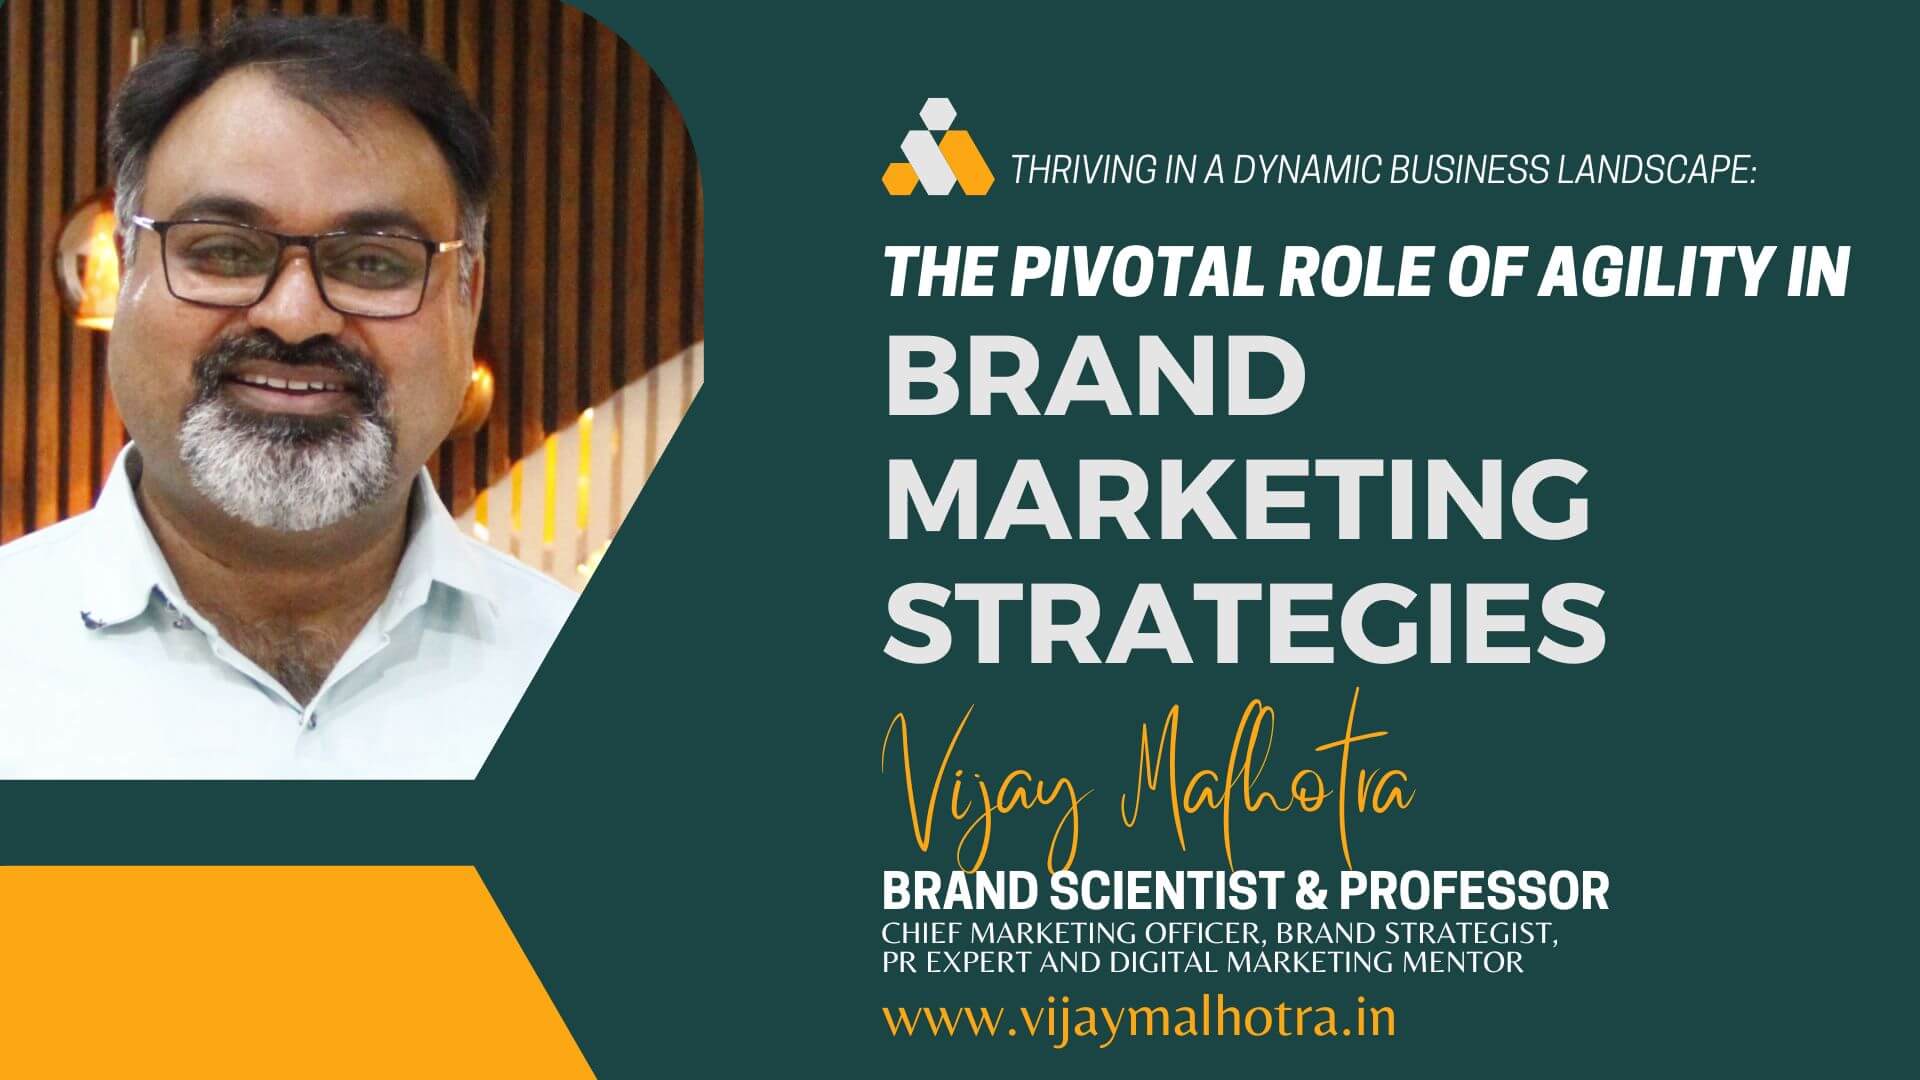 Brand Marketing Strategies by Vijay Malhotra